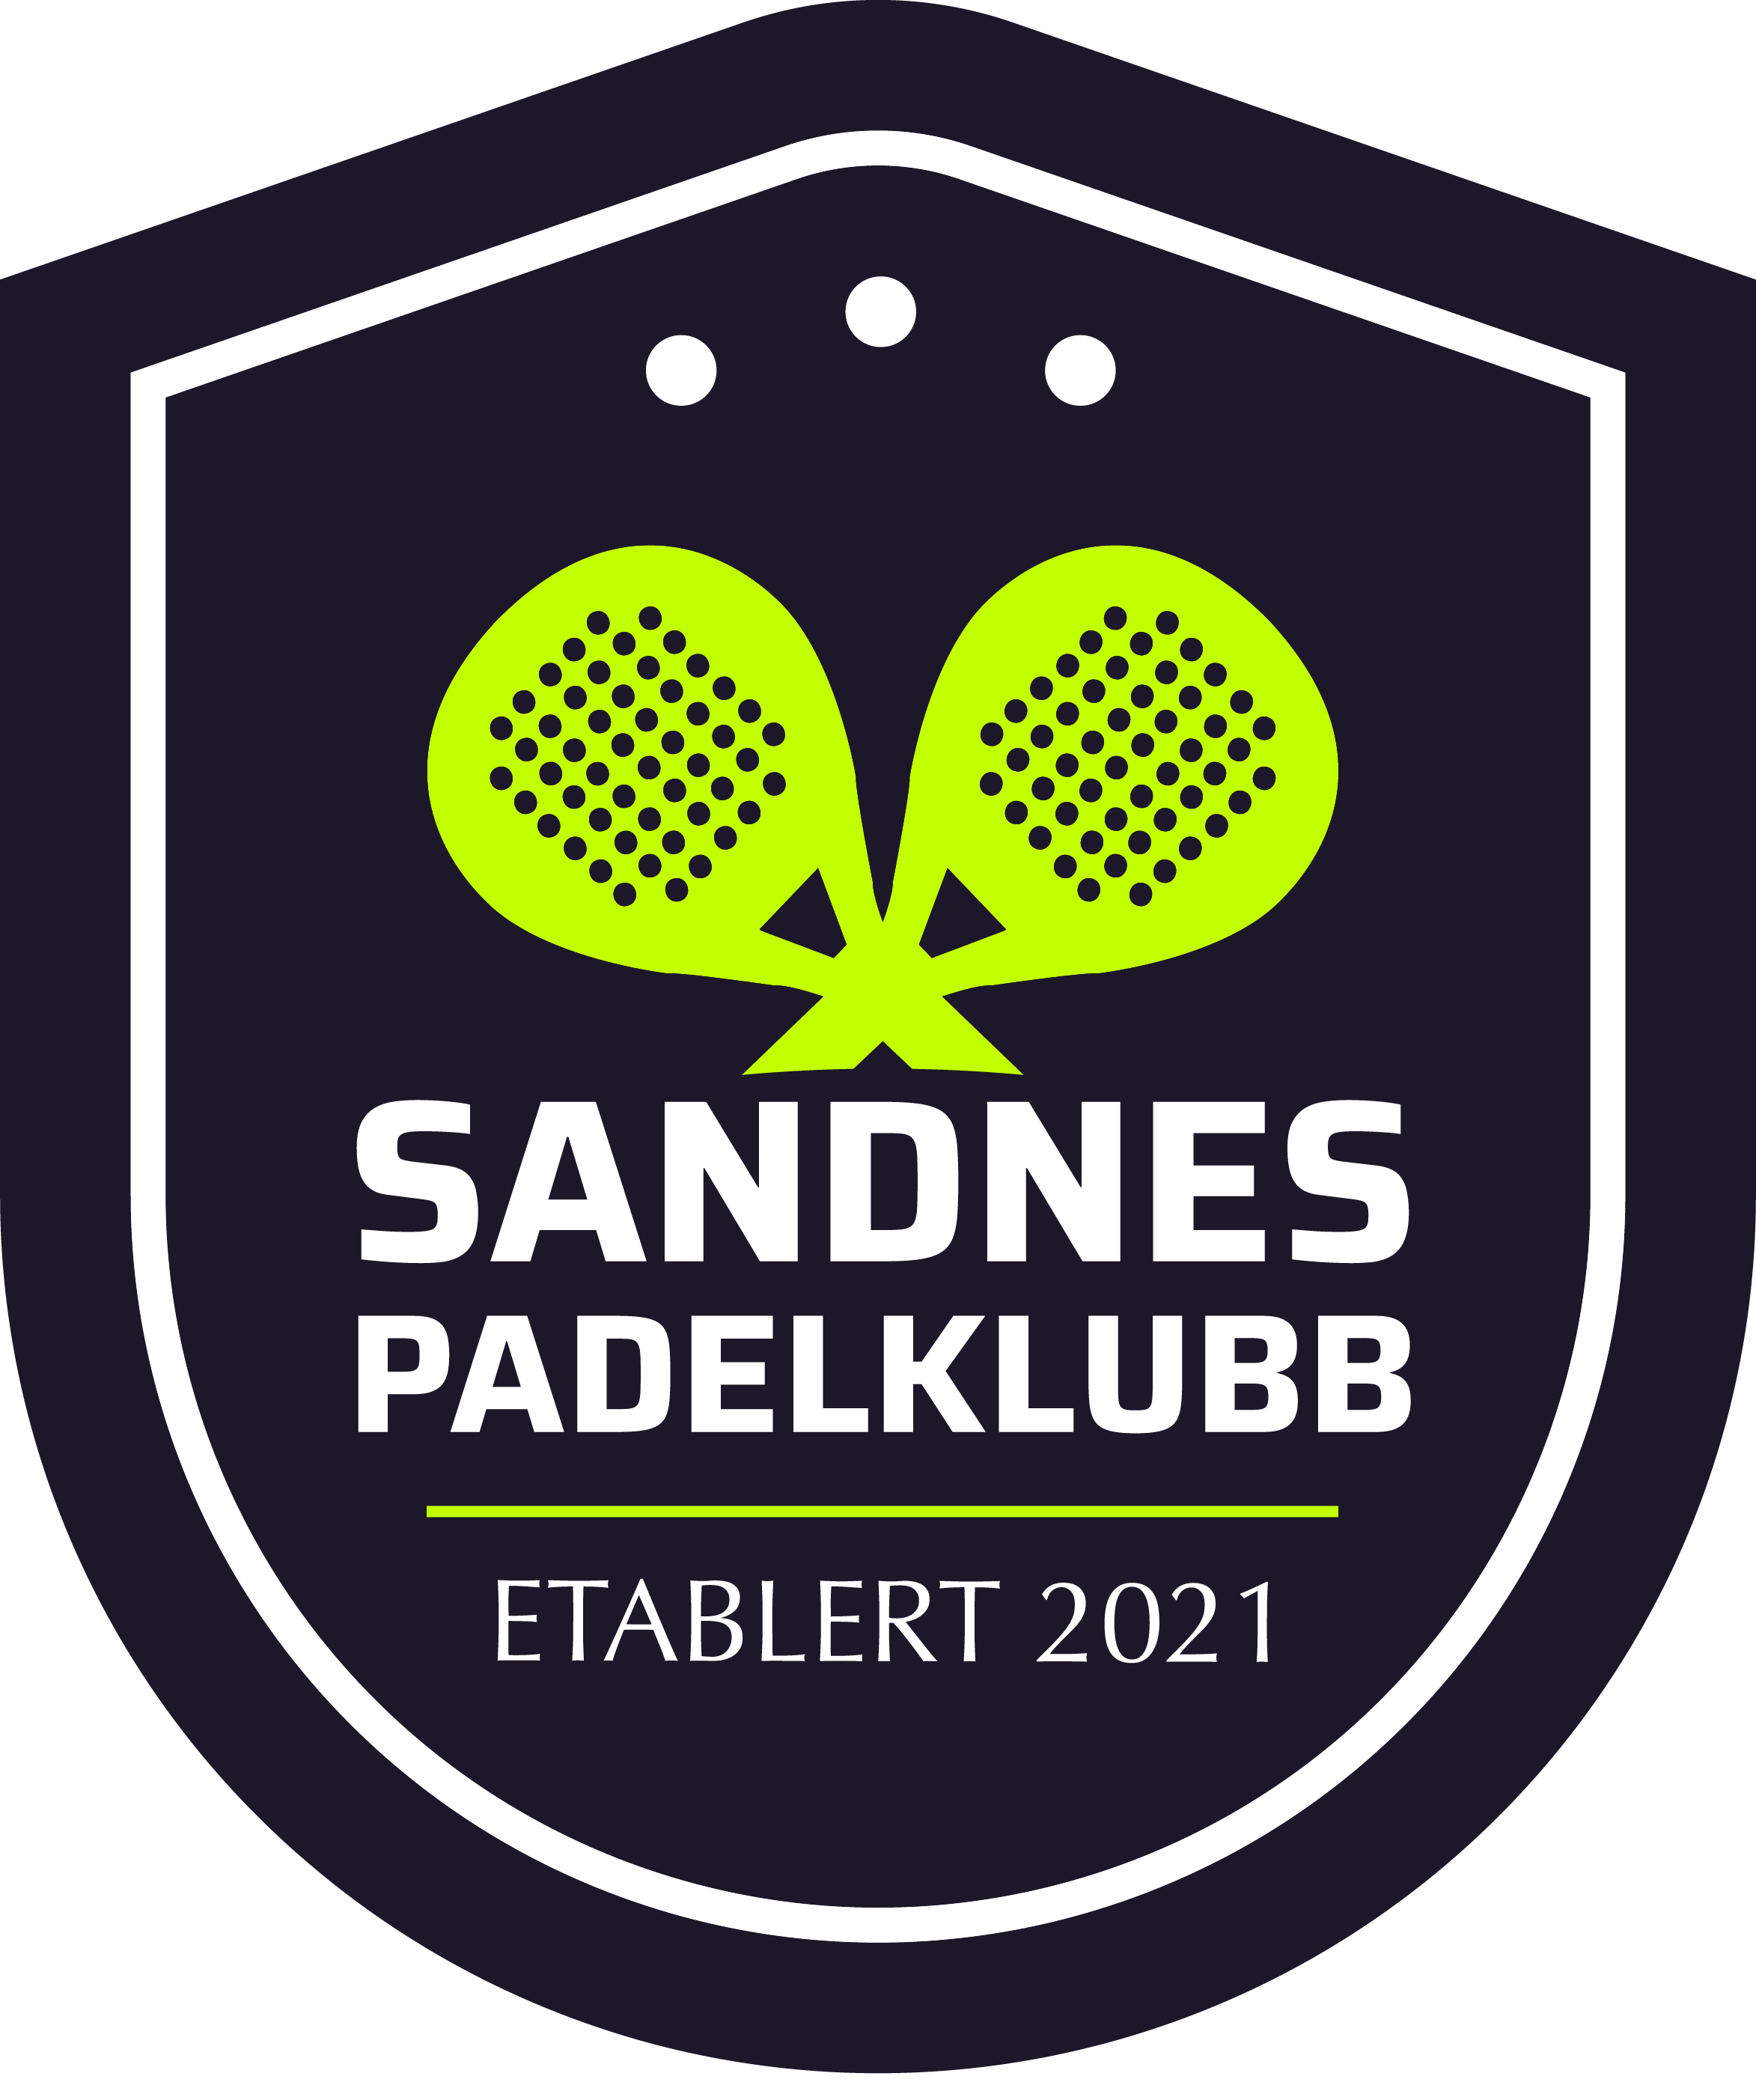 Sandnes Padelklubb PNG logo